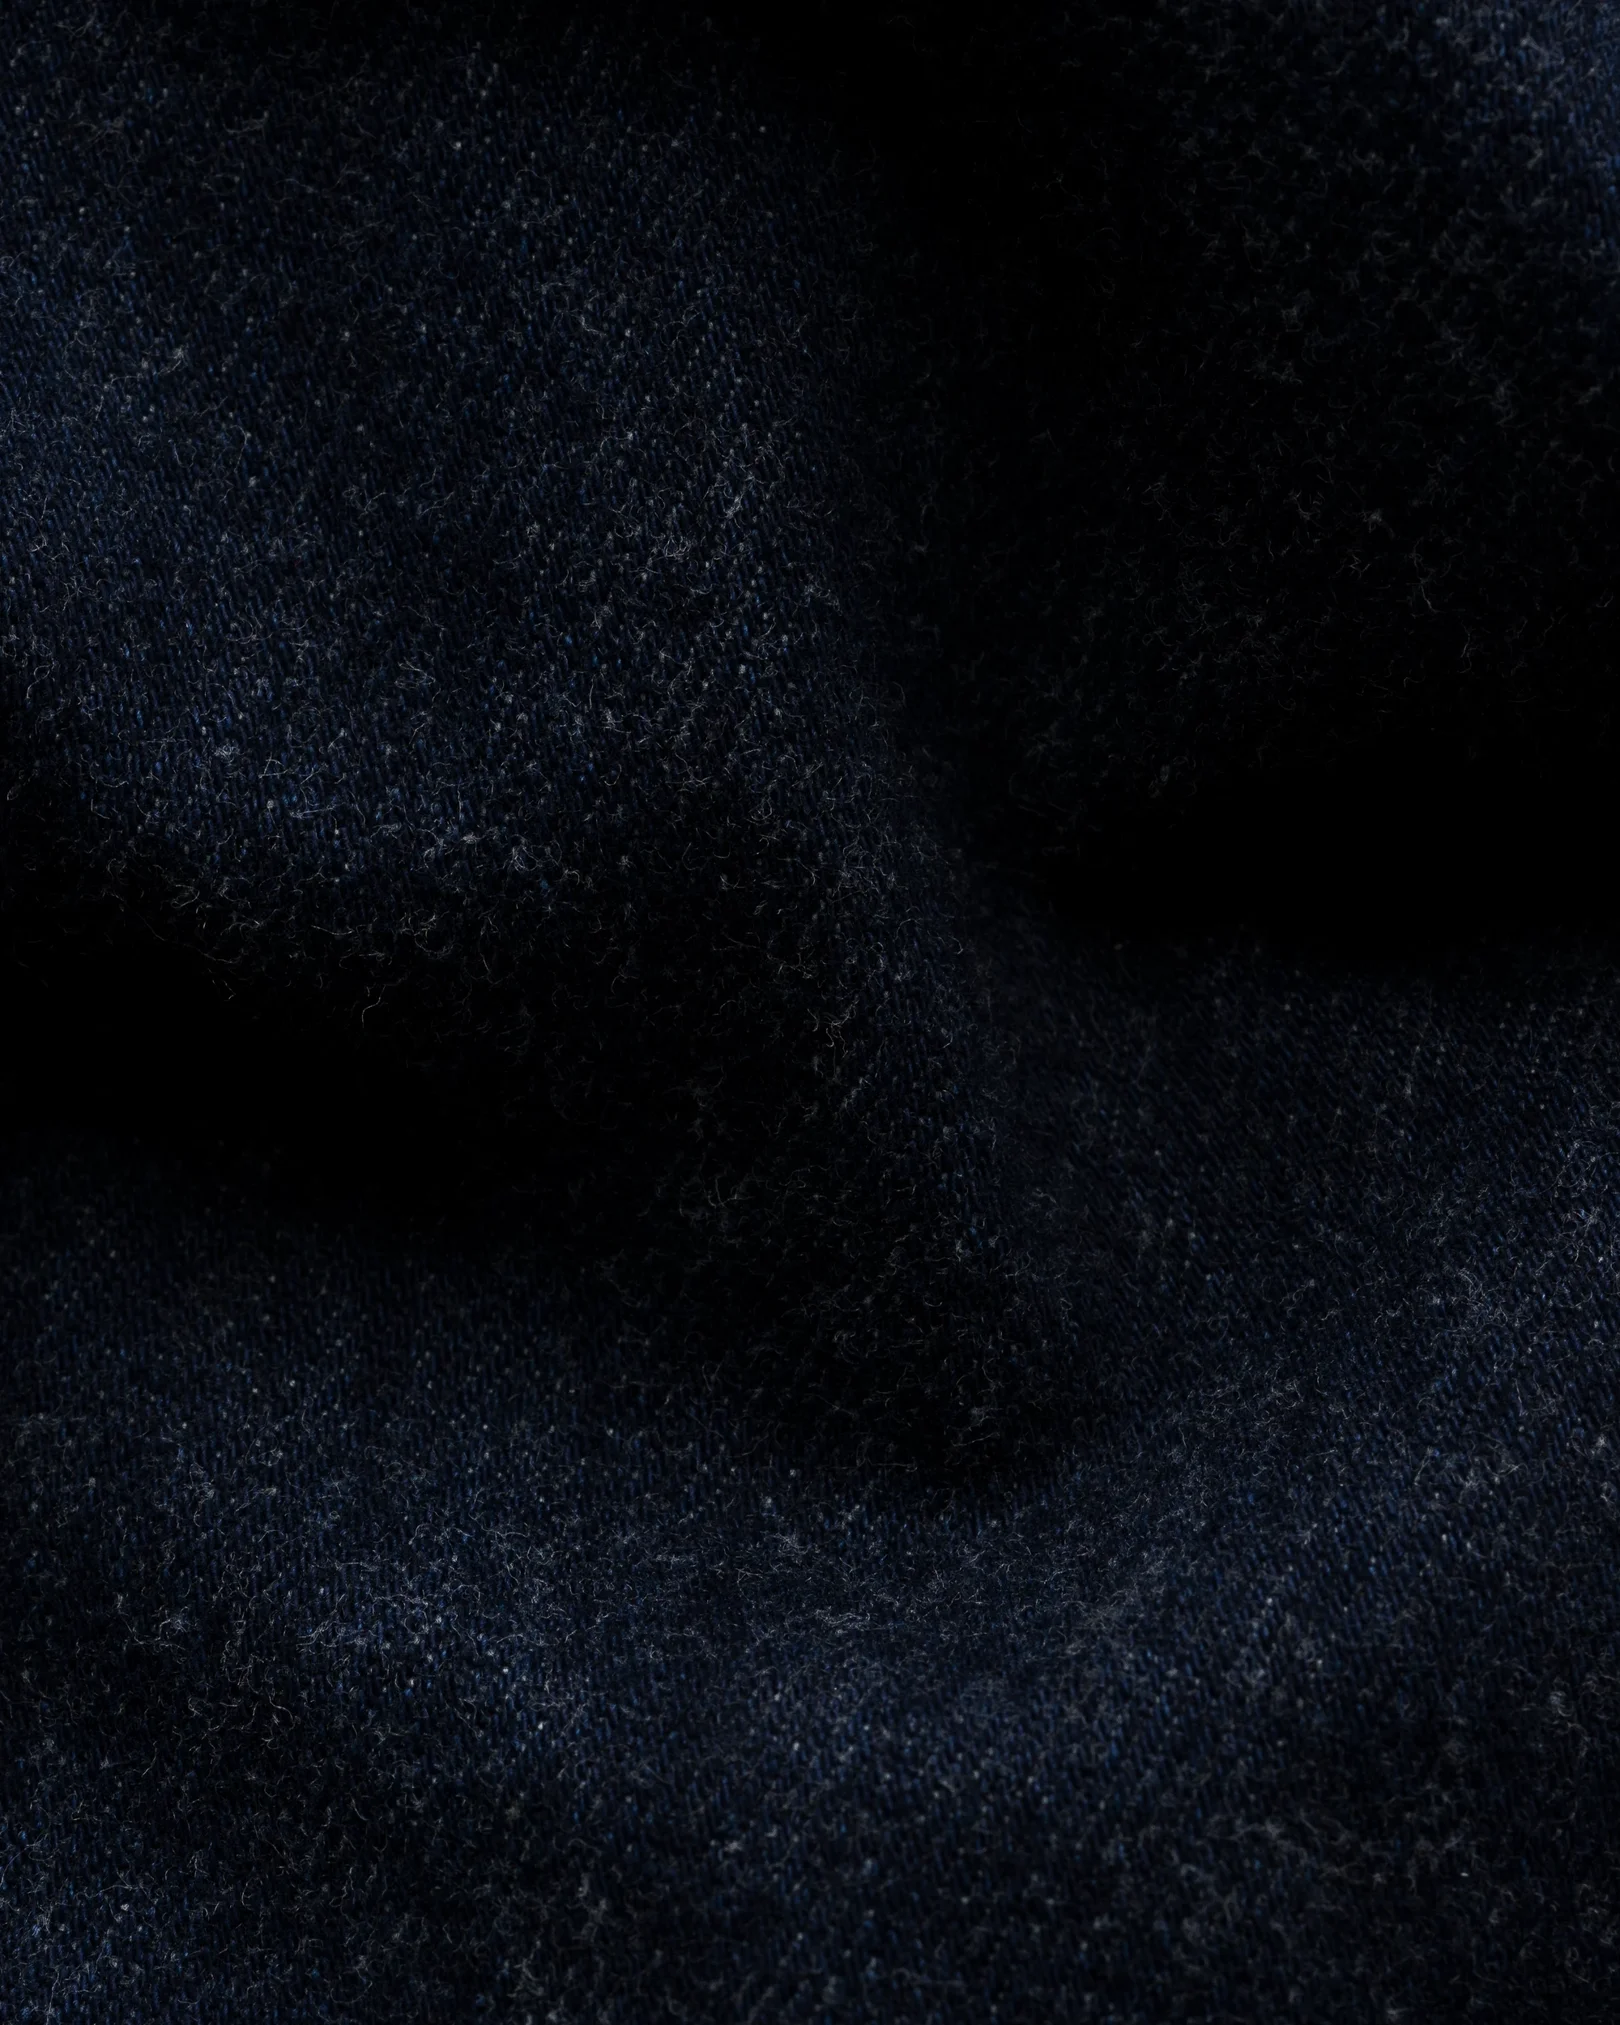 Eton - navy blue indigo turndown collar overshirt